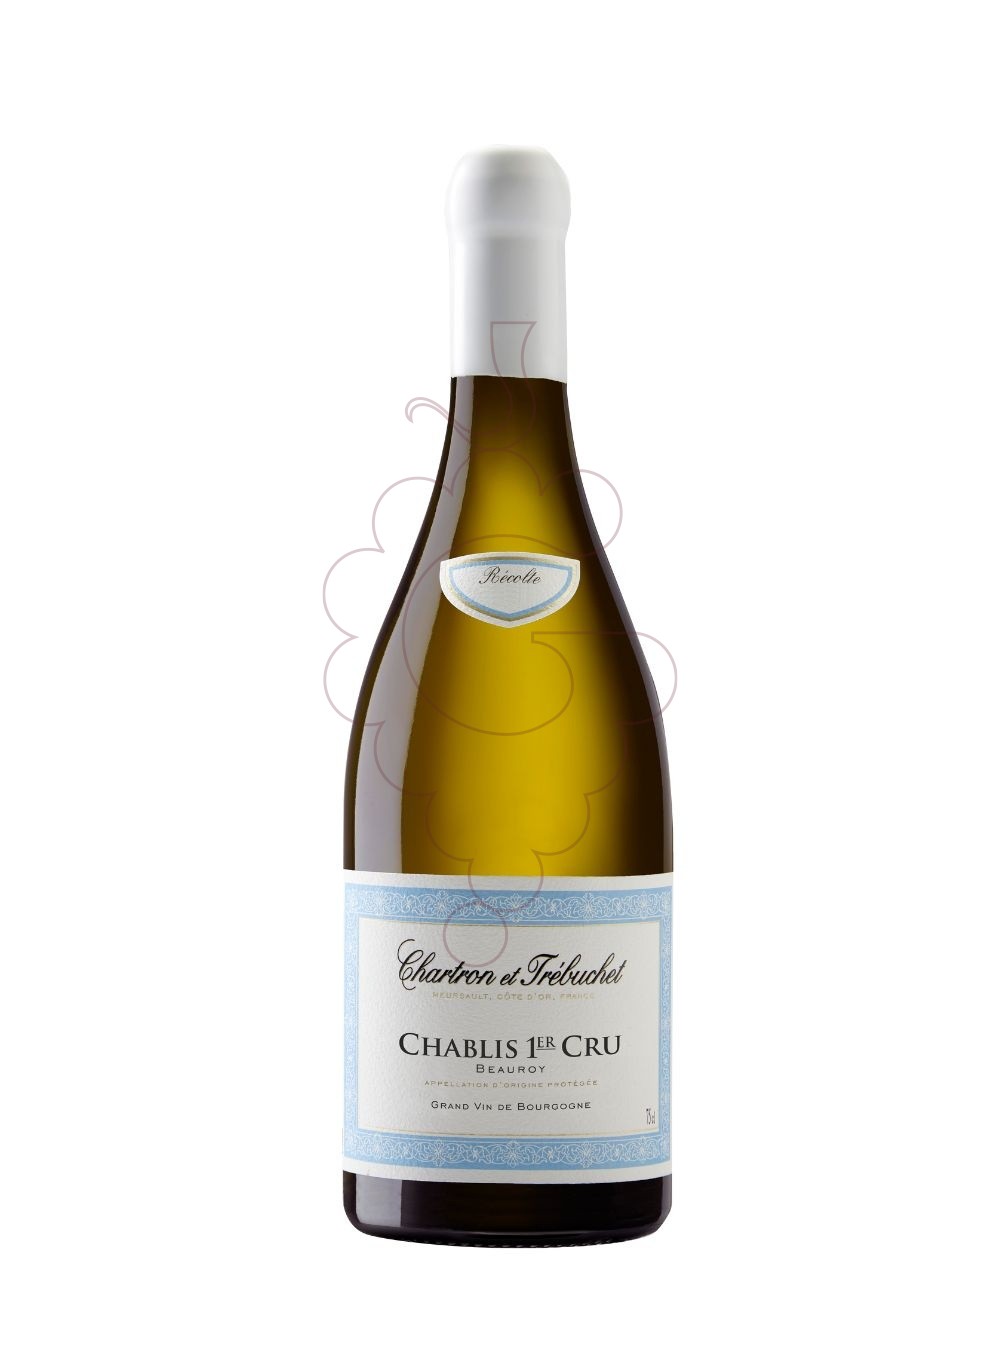 Photo Chartron et Trebuchet Chablis 1er Cru Beauroy white wine